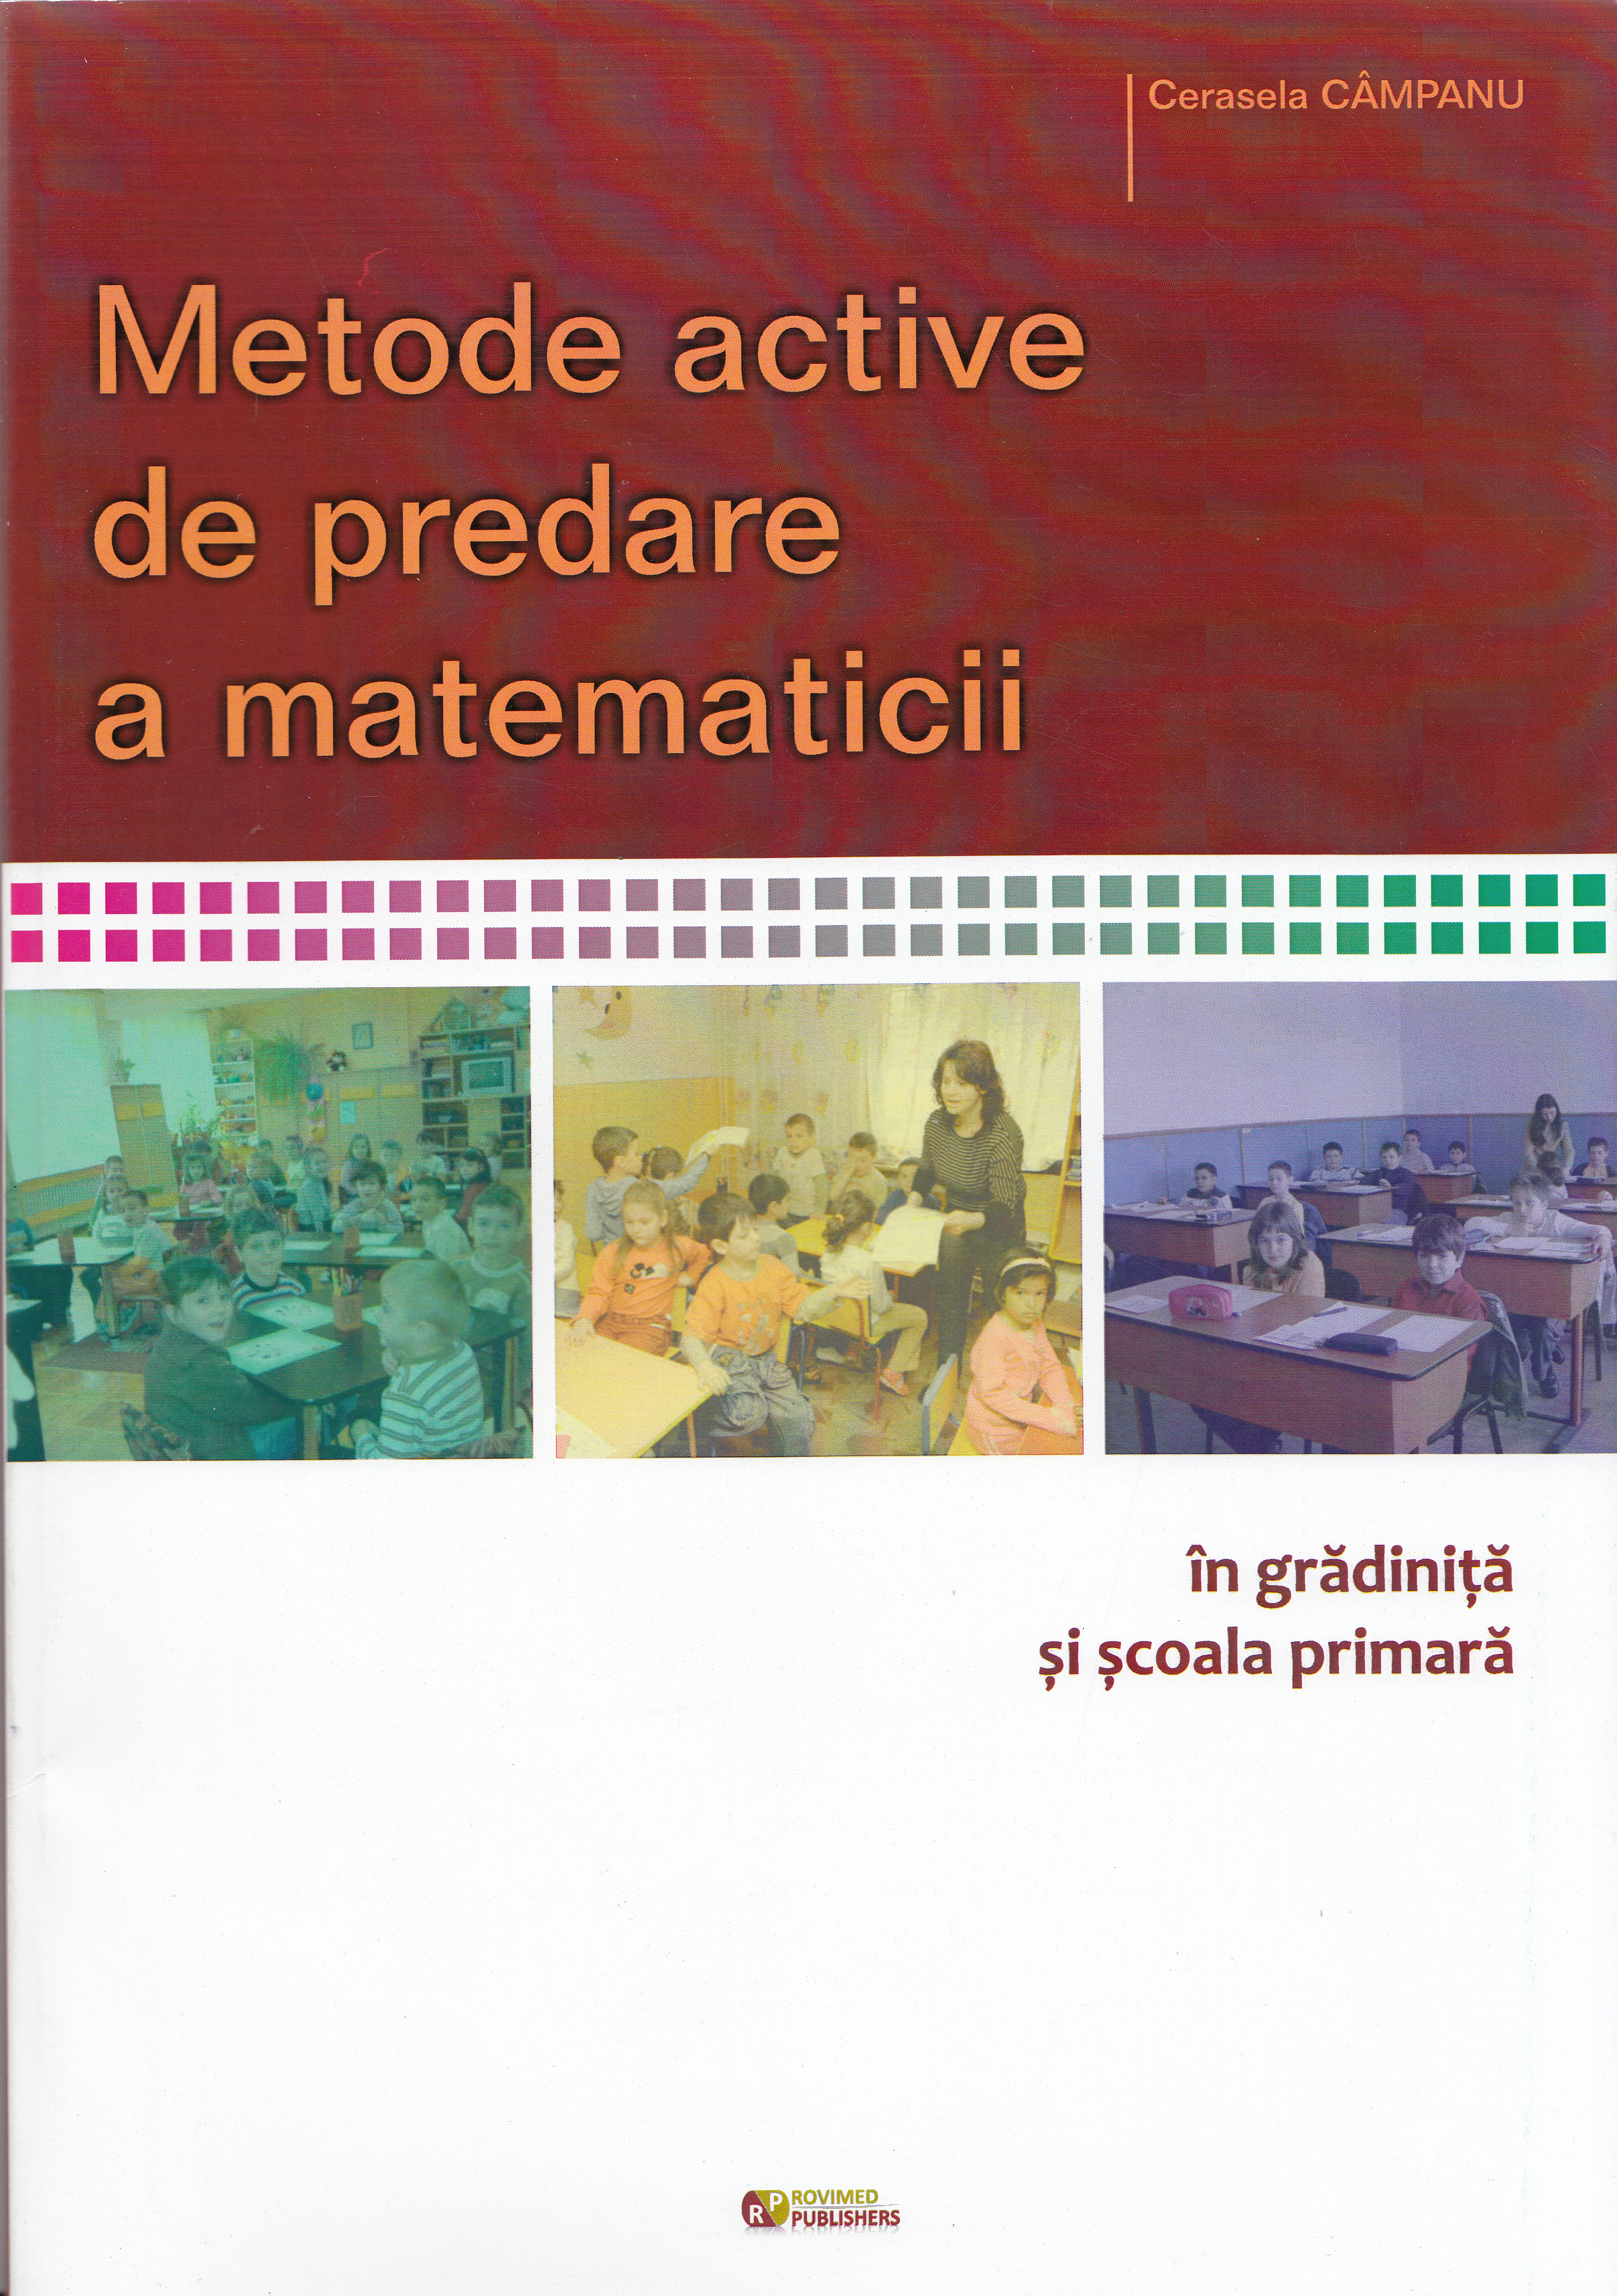 Metode active de predare a matematicii - Cerasela Campanu